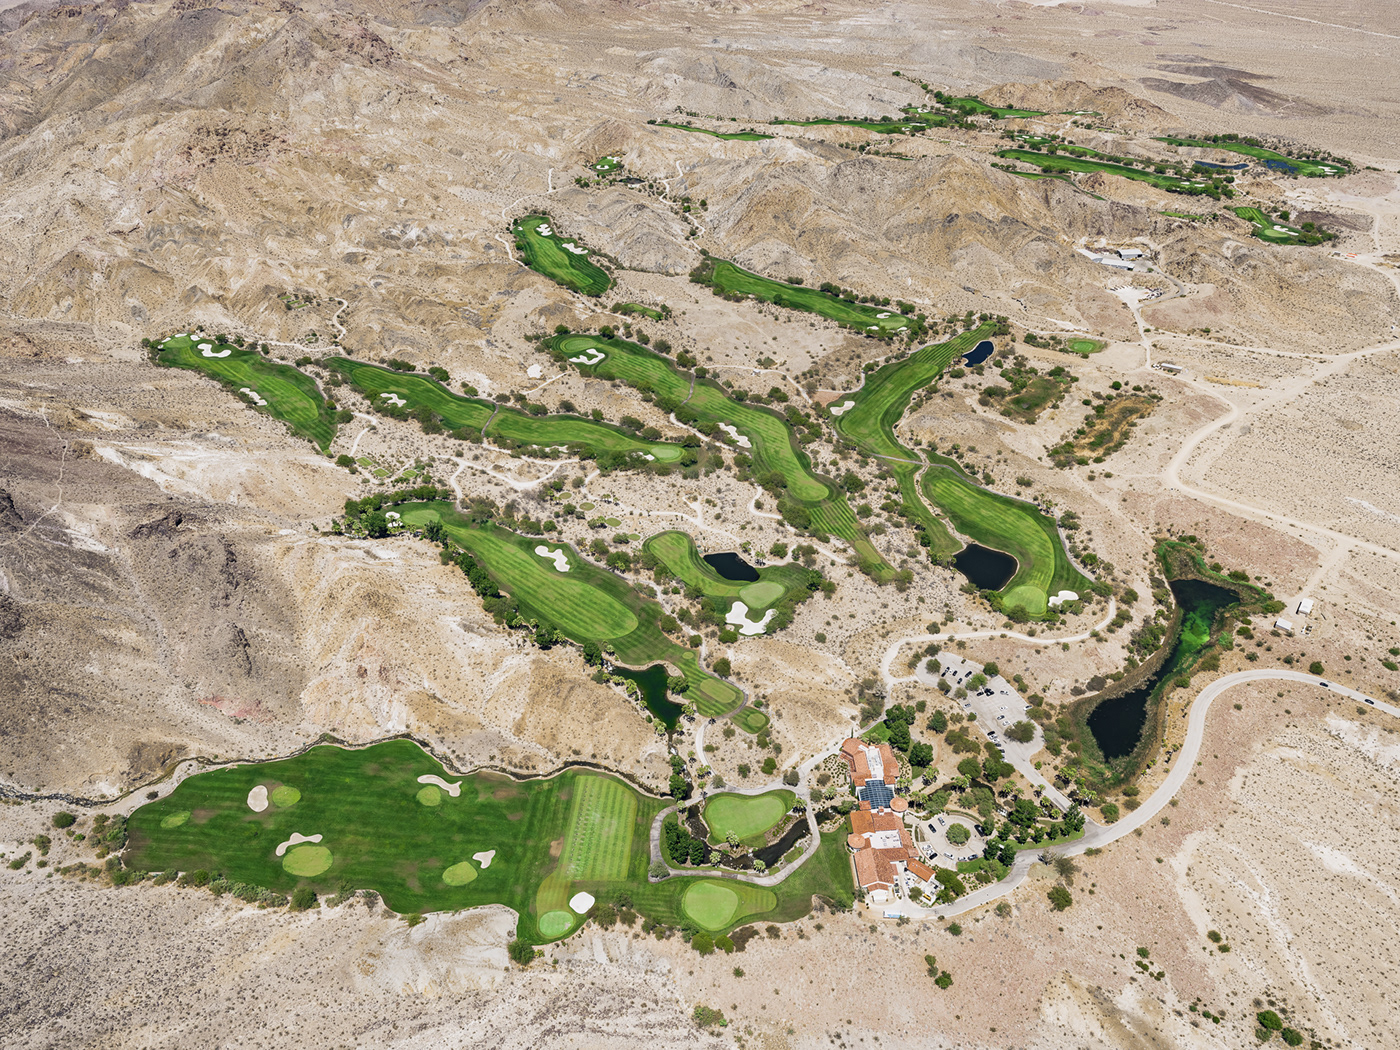 golf course golf water desert Las Vegas arid dry Sustainability environment anthropocene